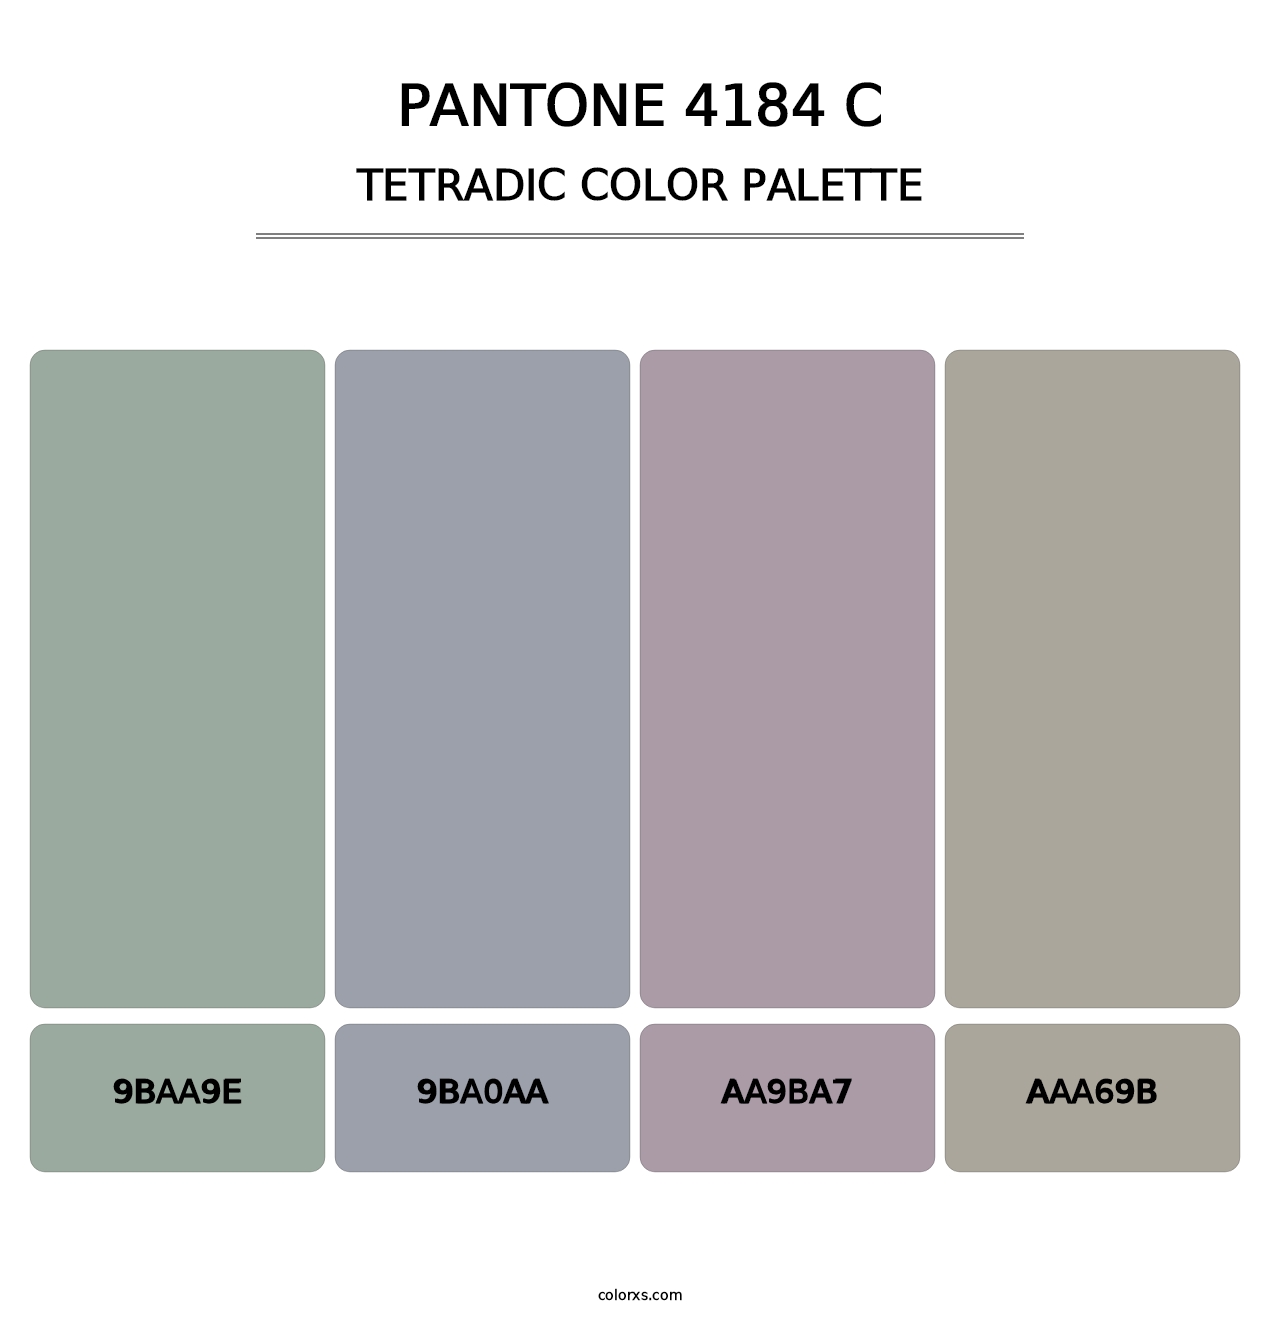 PANTONE 4184 C - Tetradic Color Palette